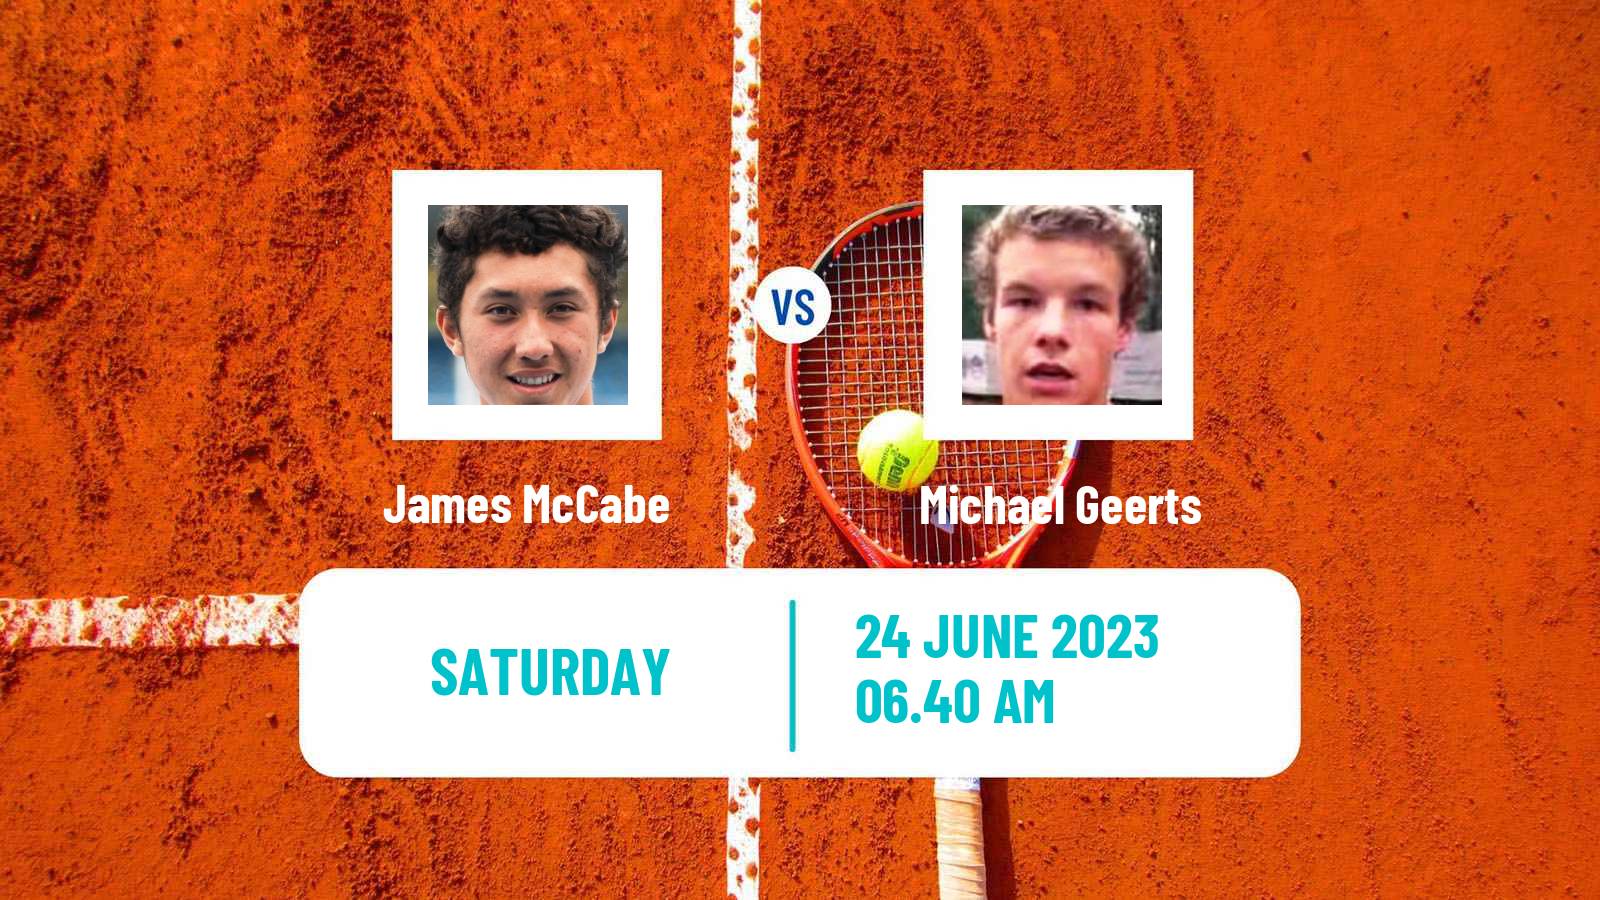 Tennis ATP Mallorca James McCabe - Michael Geerts